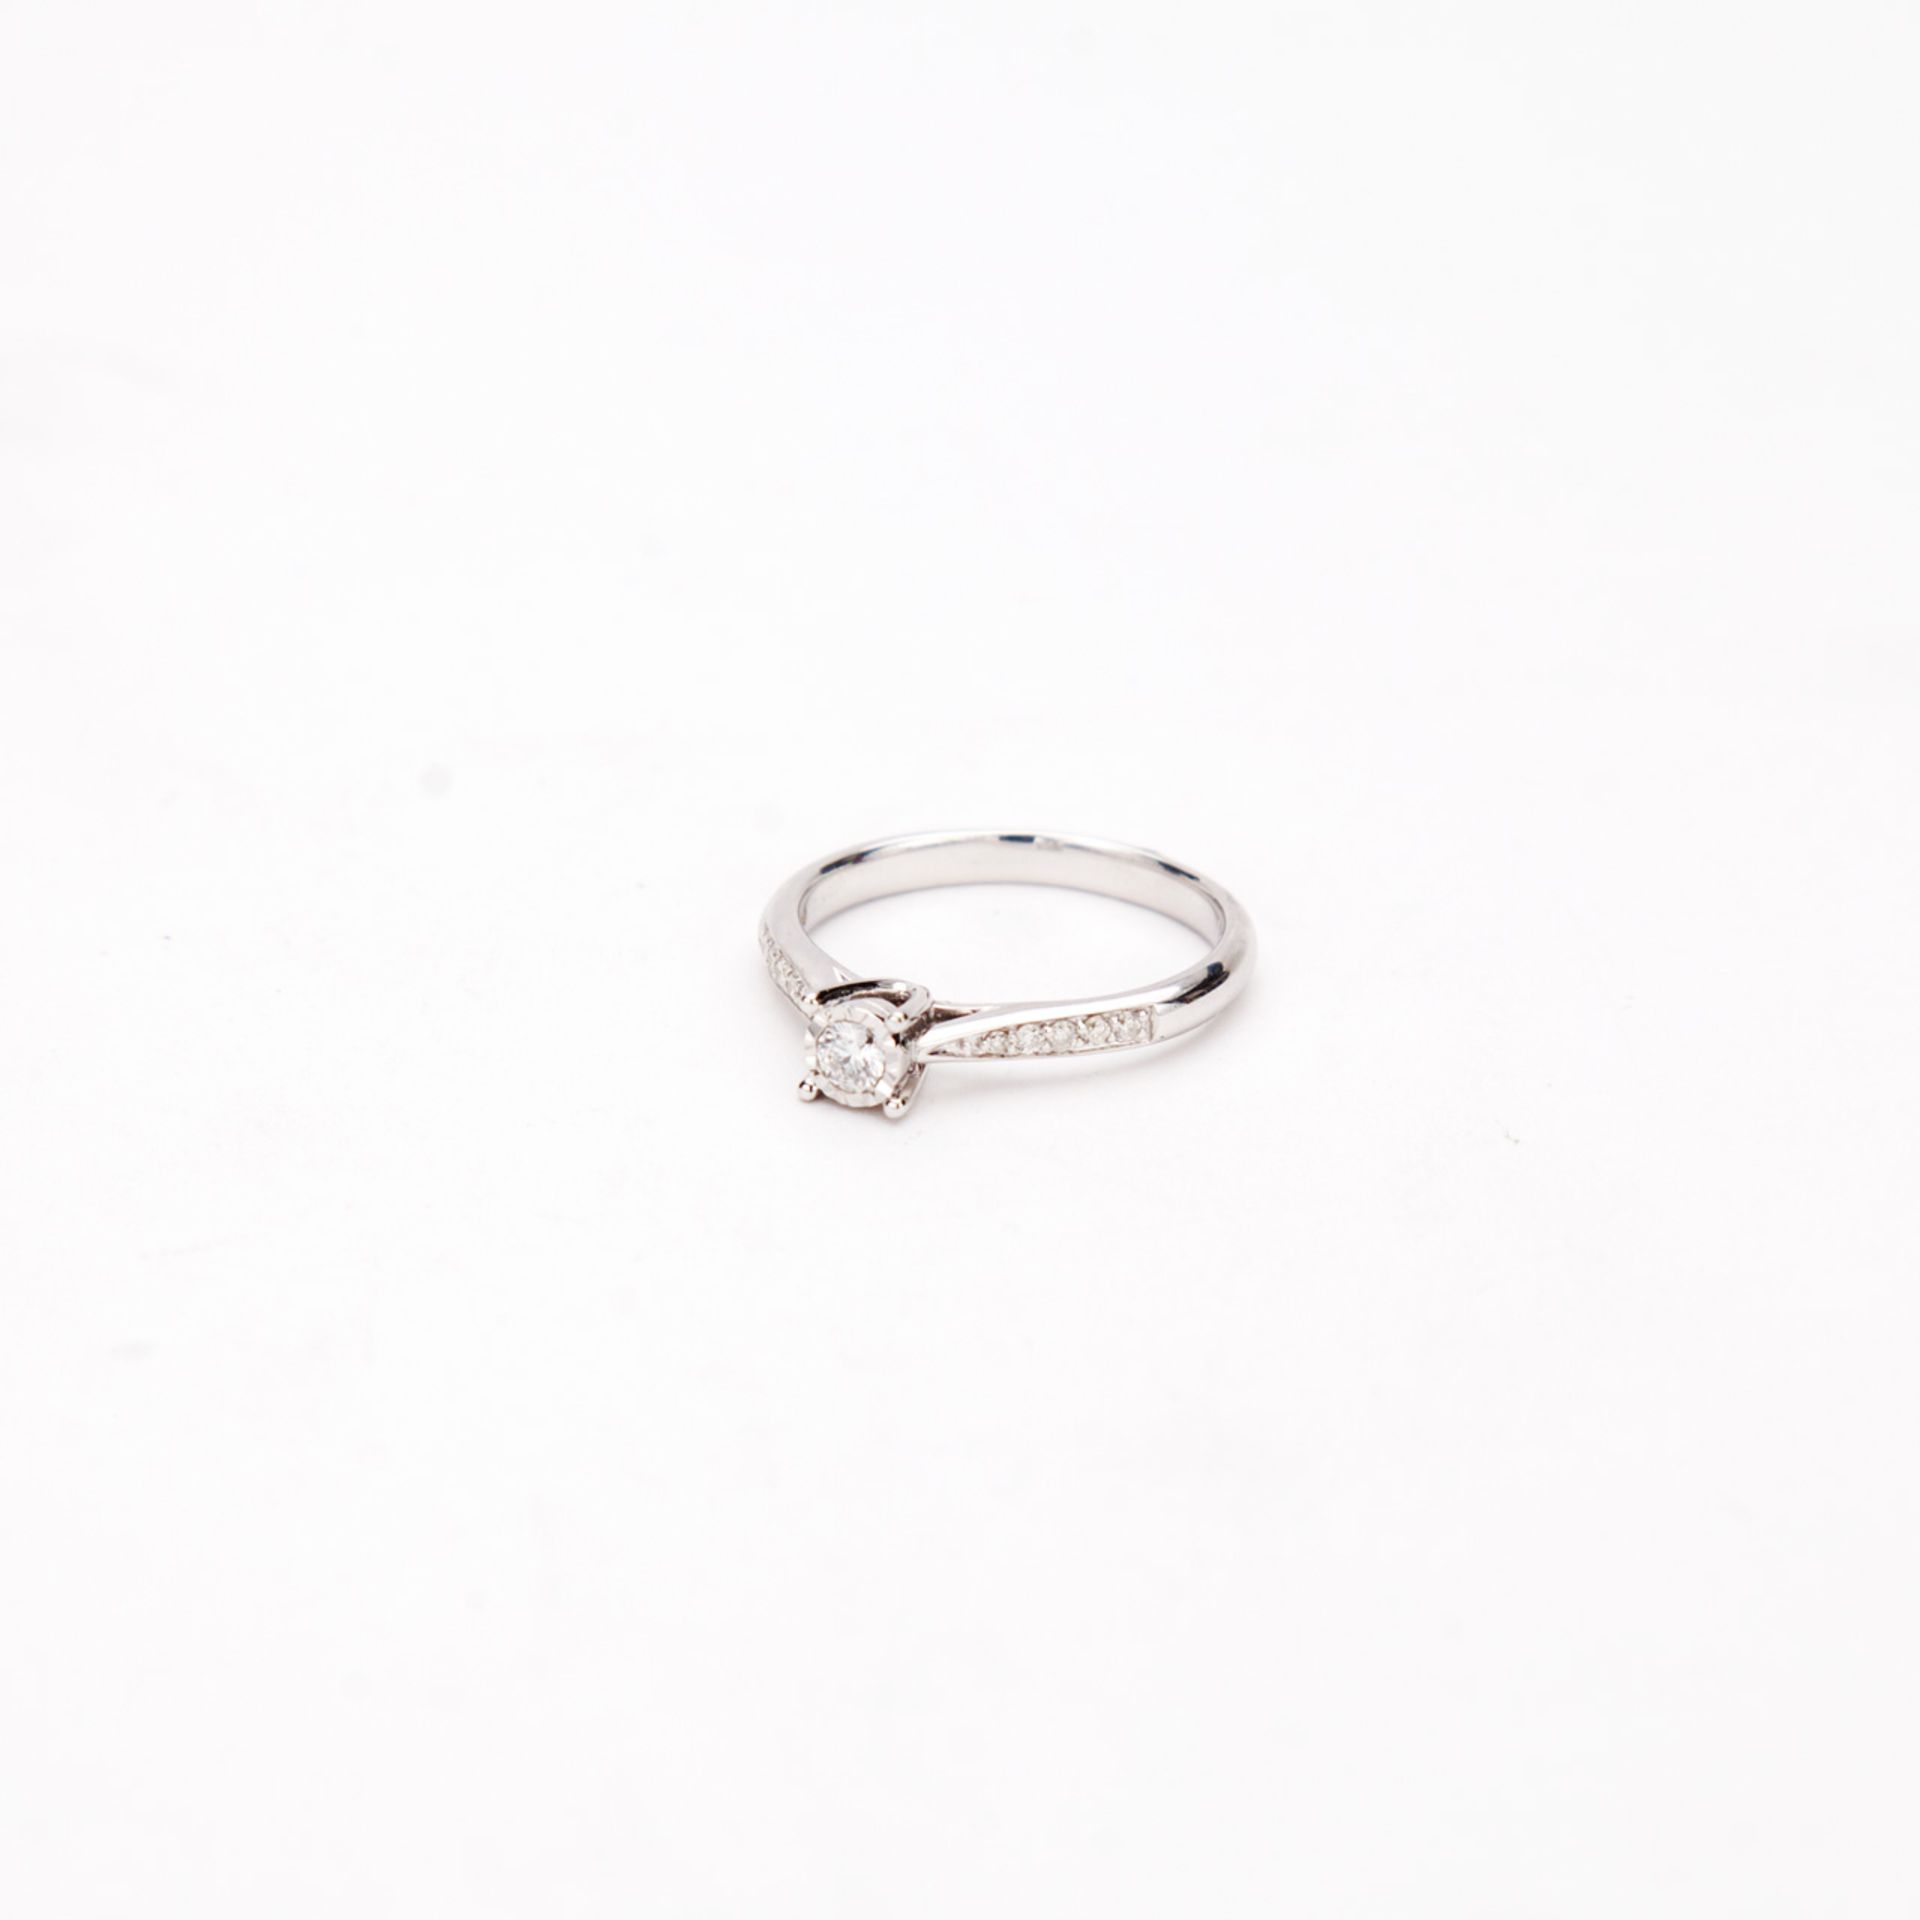 White Gold 9ct Diamond Ring - Image 2 of 2